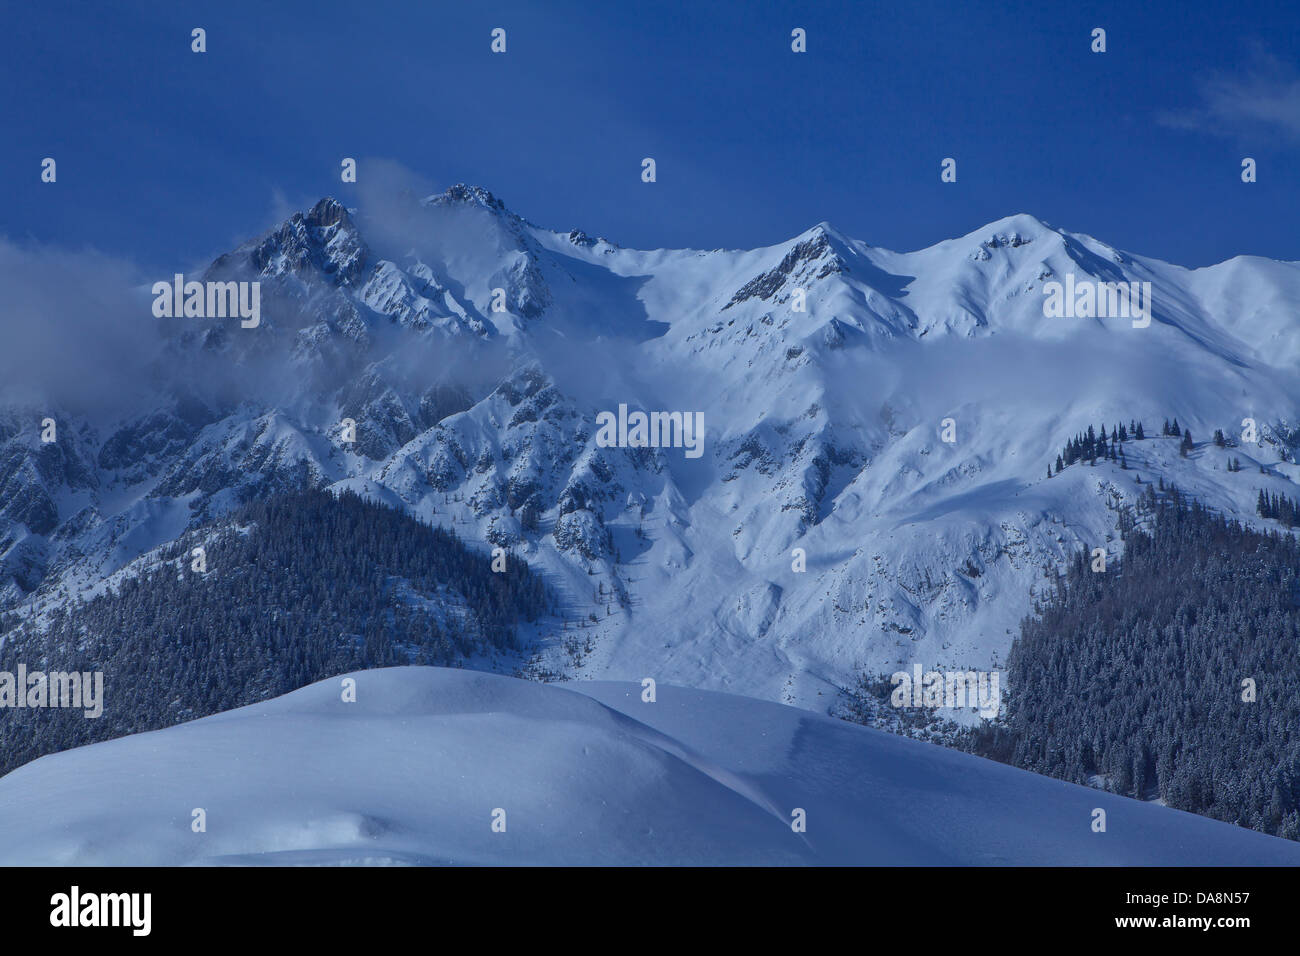 Austria, Europe, Tyrol, Mieminger plateau, Obsteig, Holzleiten, mountains, winter, Wannig, Mieminger chain, wood, forest, snow, Stock Photo